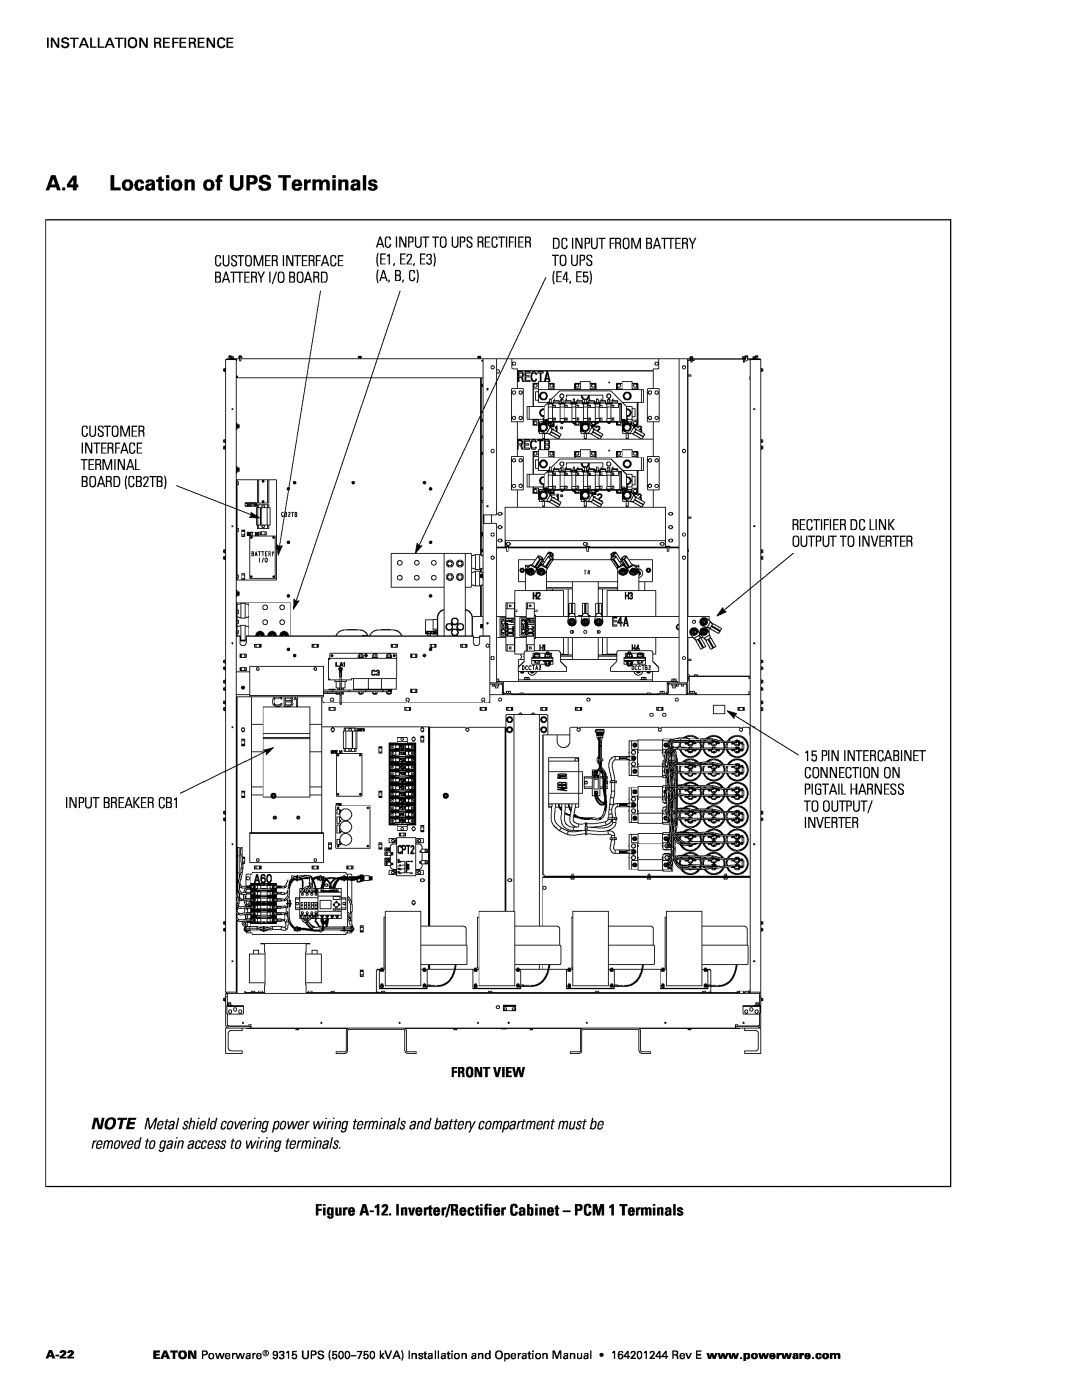 Powerware Powerware 9315 A.4 Location of UPS Terminals, Figure A‐12. Inverter/Rectifier Cabinet - PCM 1 Terminals 